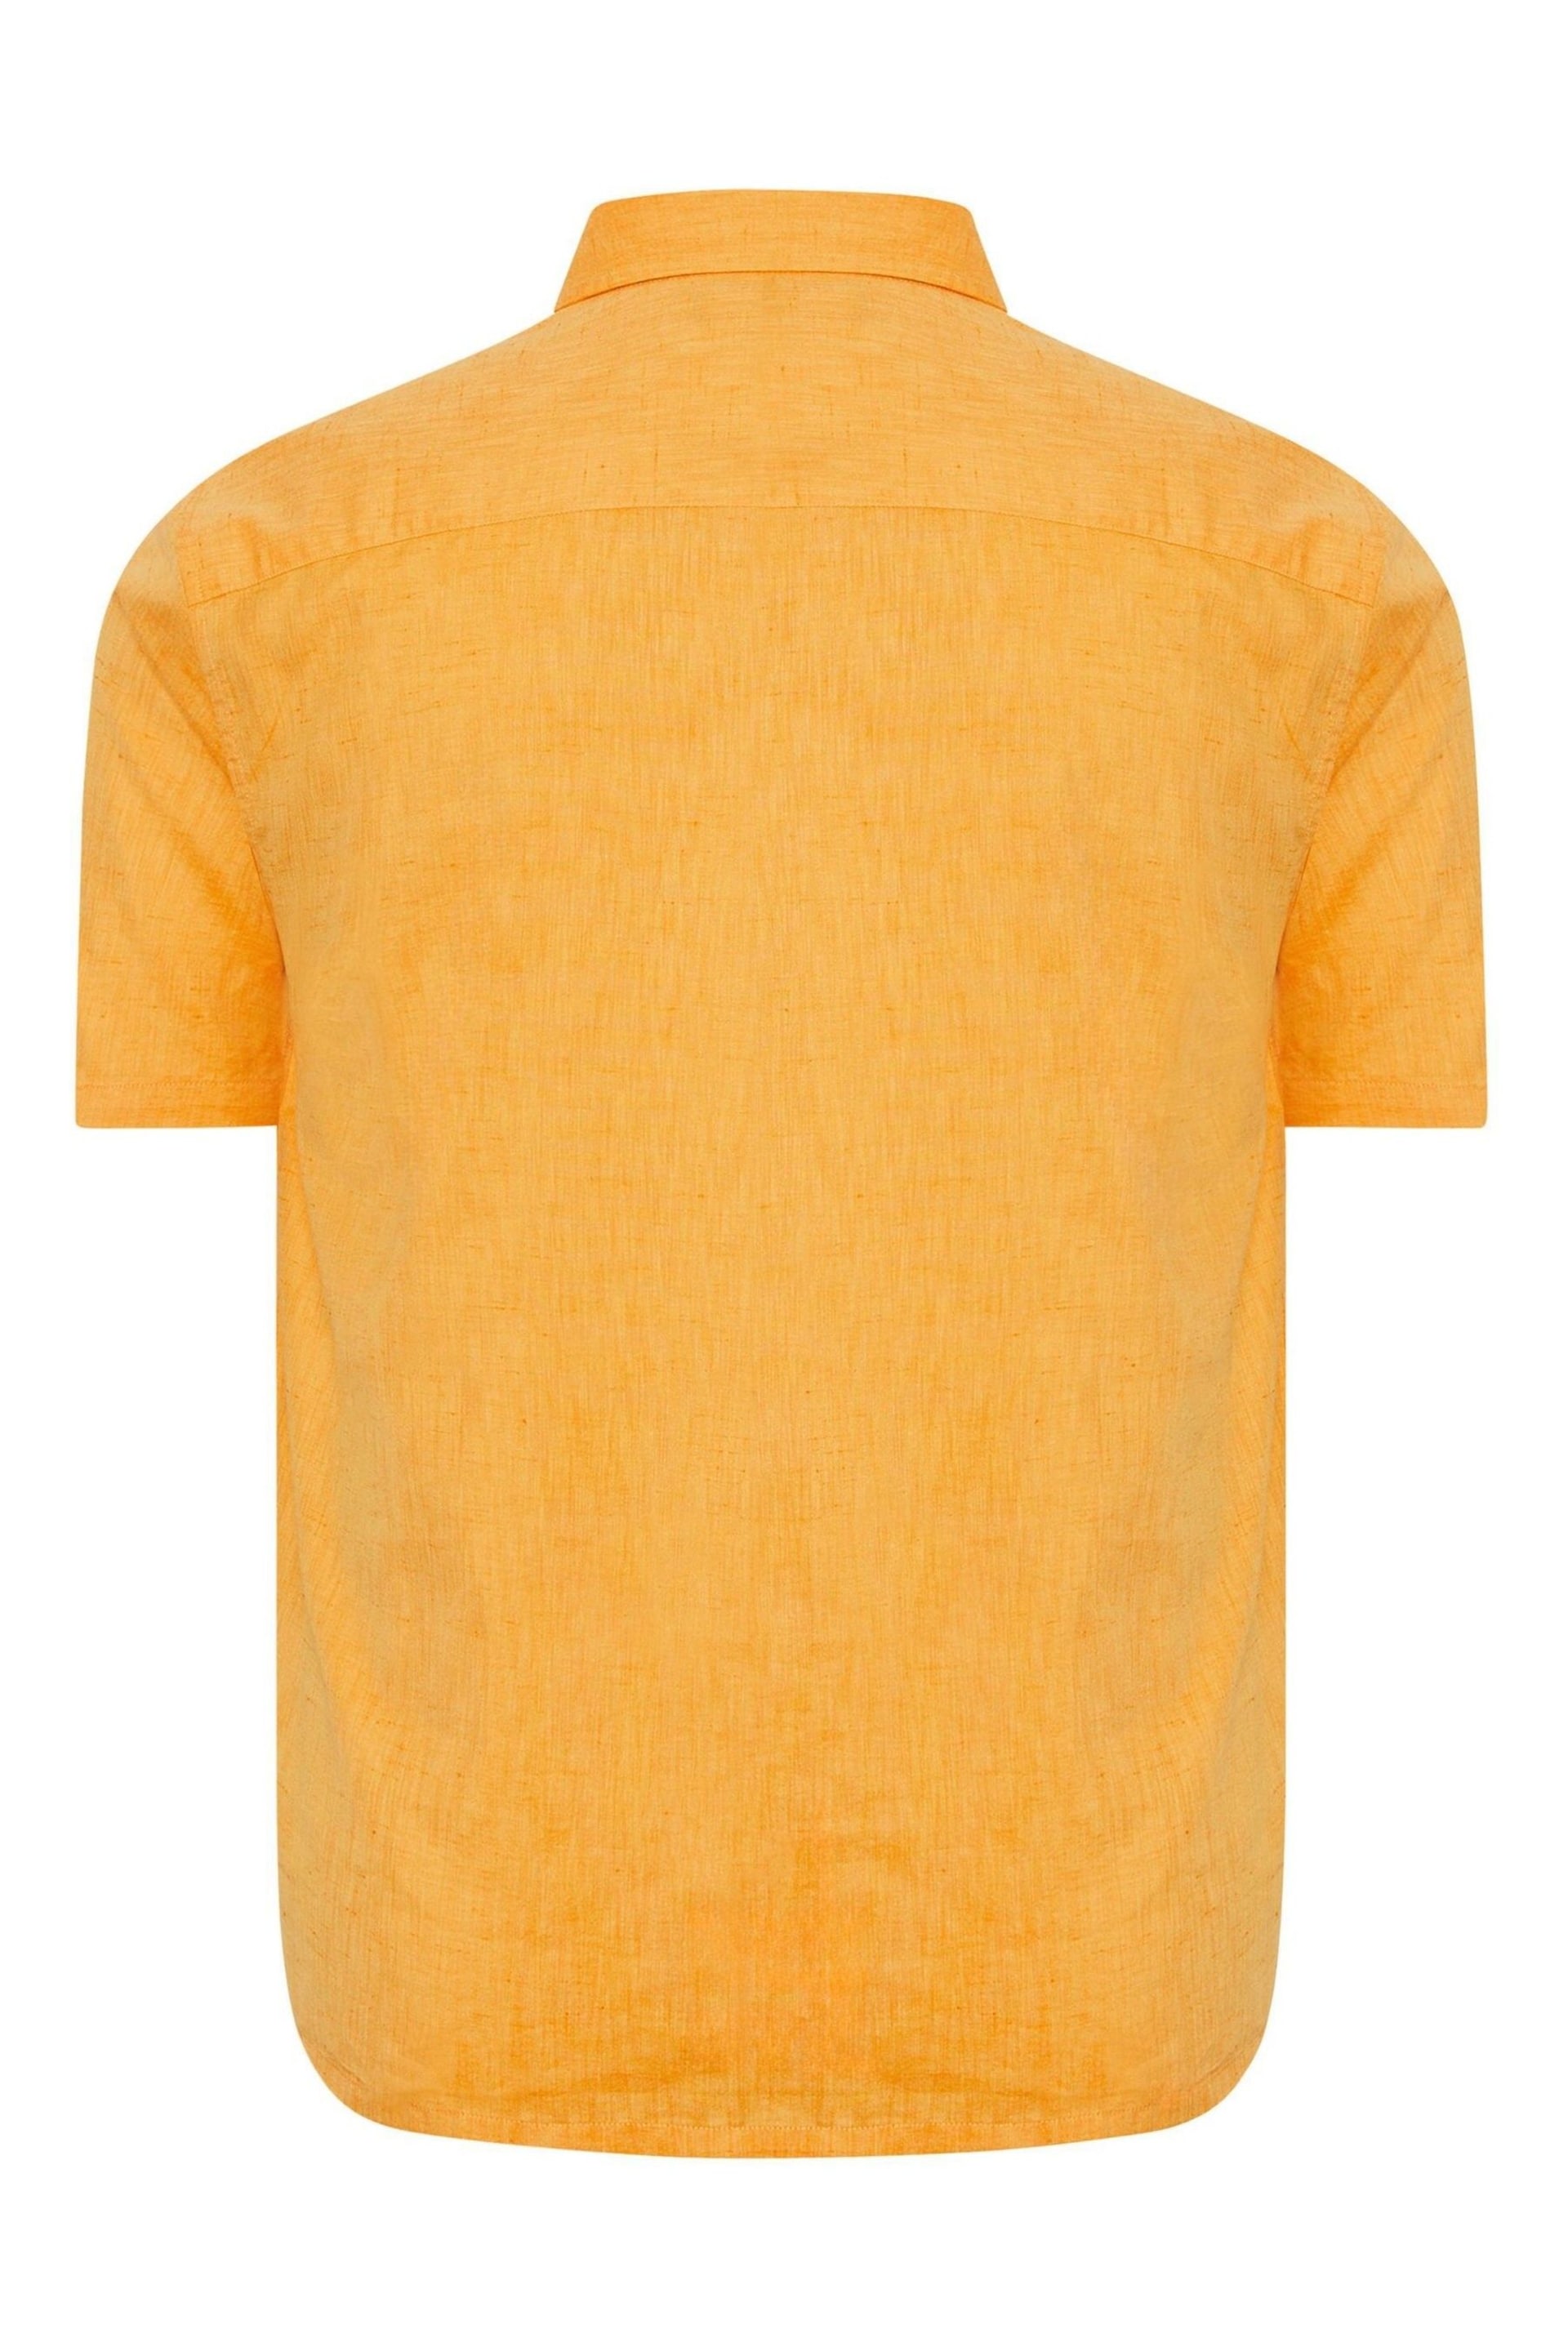 BadRhino Big & Tall Orange Blue Marl Short Sleeve Shirt - Image 3 of 3